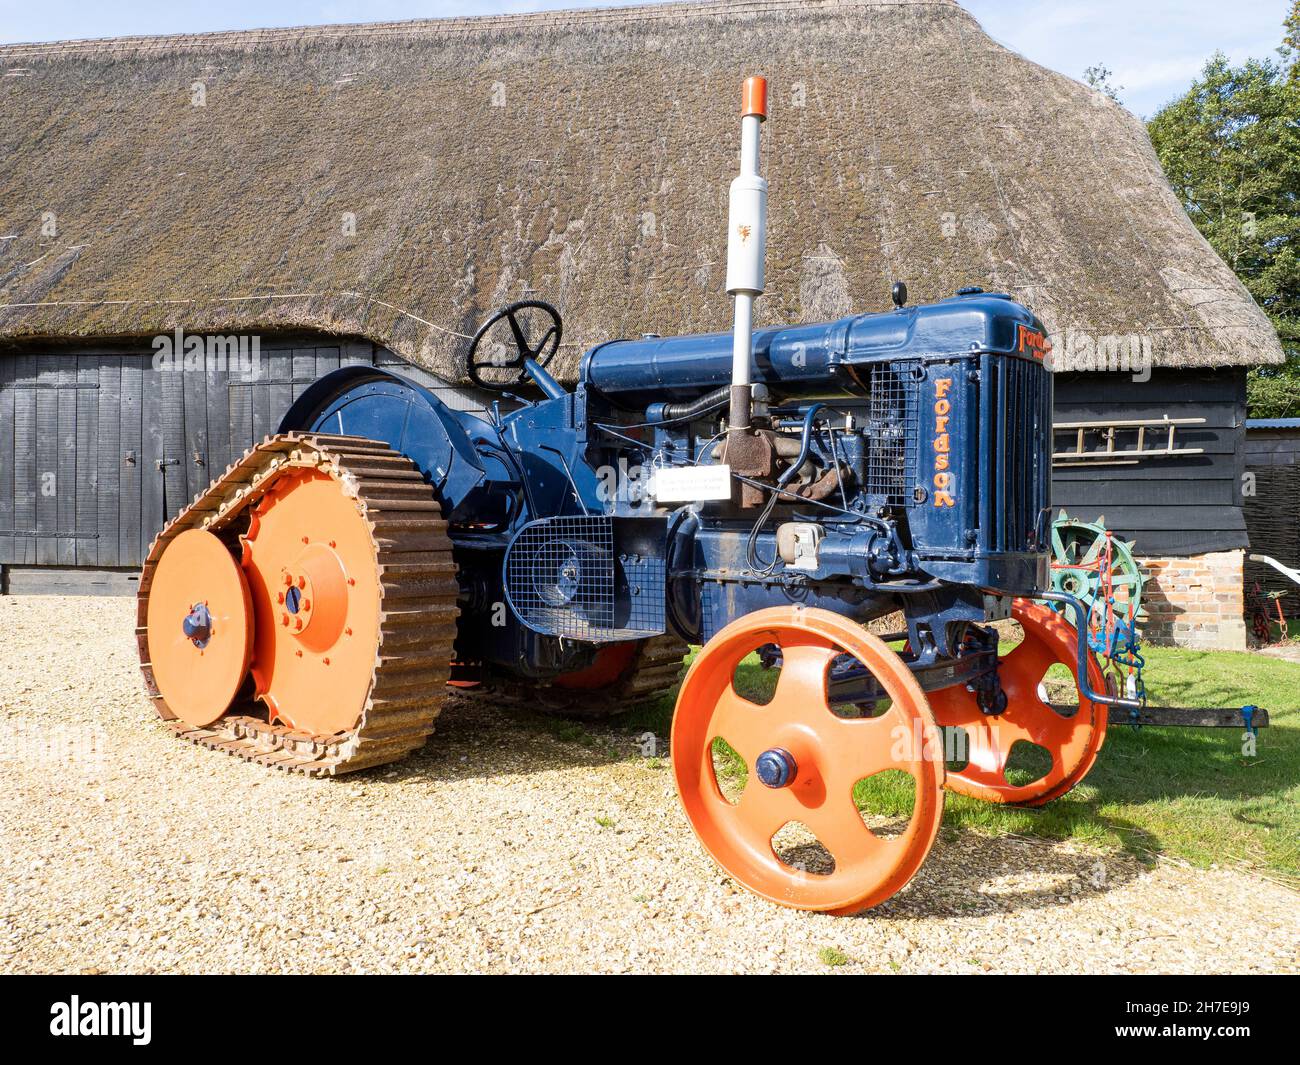 Tamaño de imagen roadless tractores enmarcado impresión A4 celebra historia Ltd 1/250 